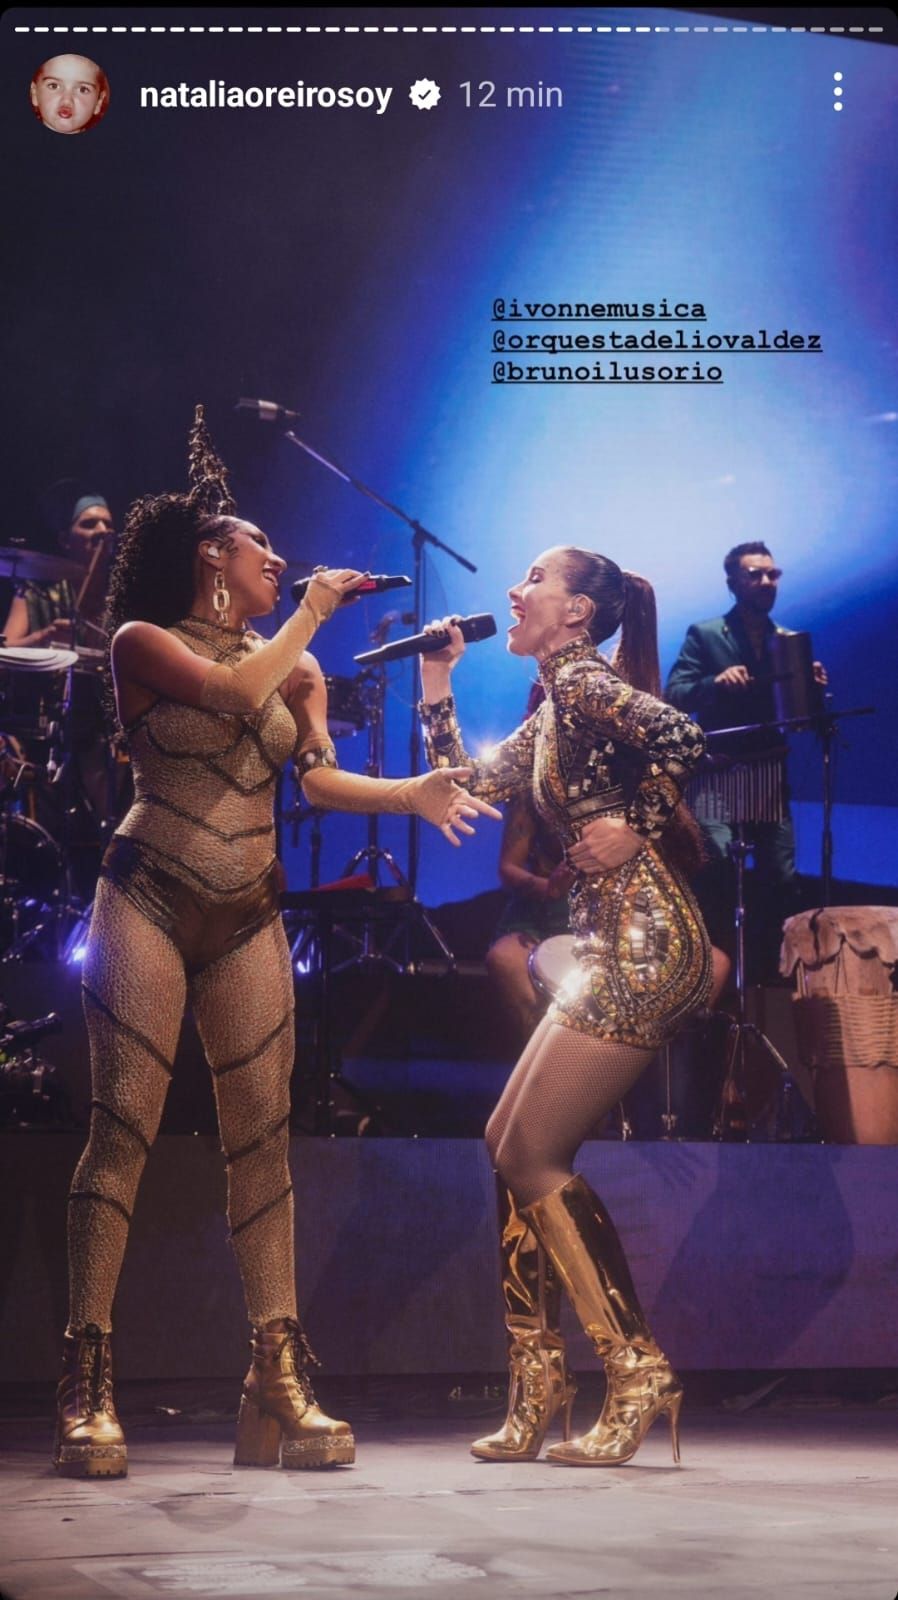 Natalia Oreiro cantó con La Delio Valdez